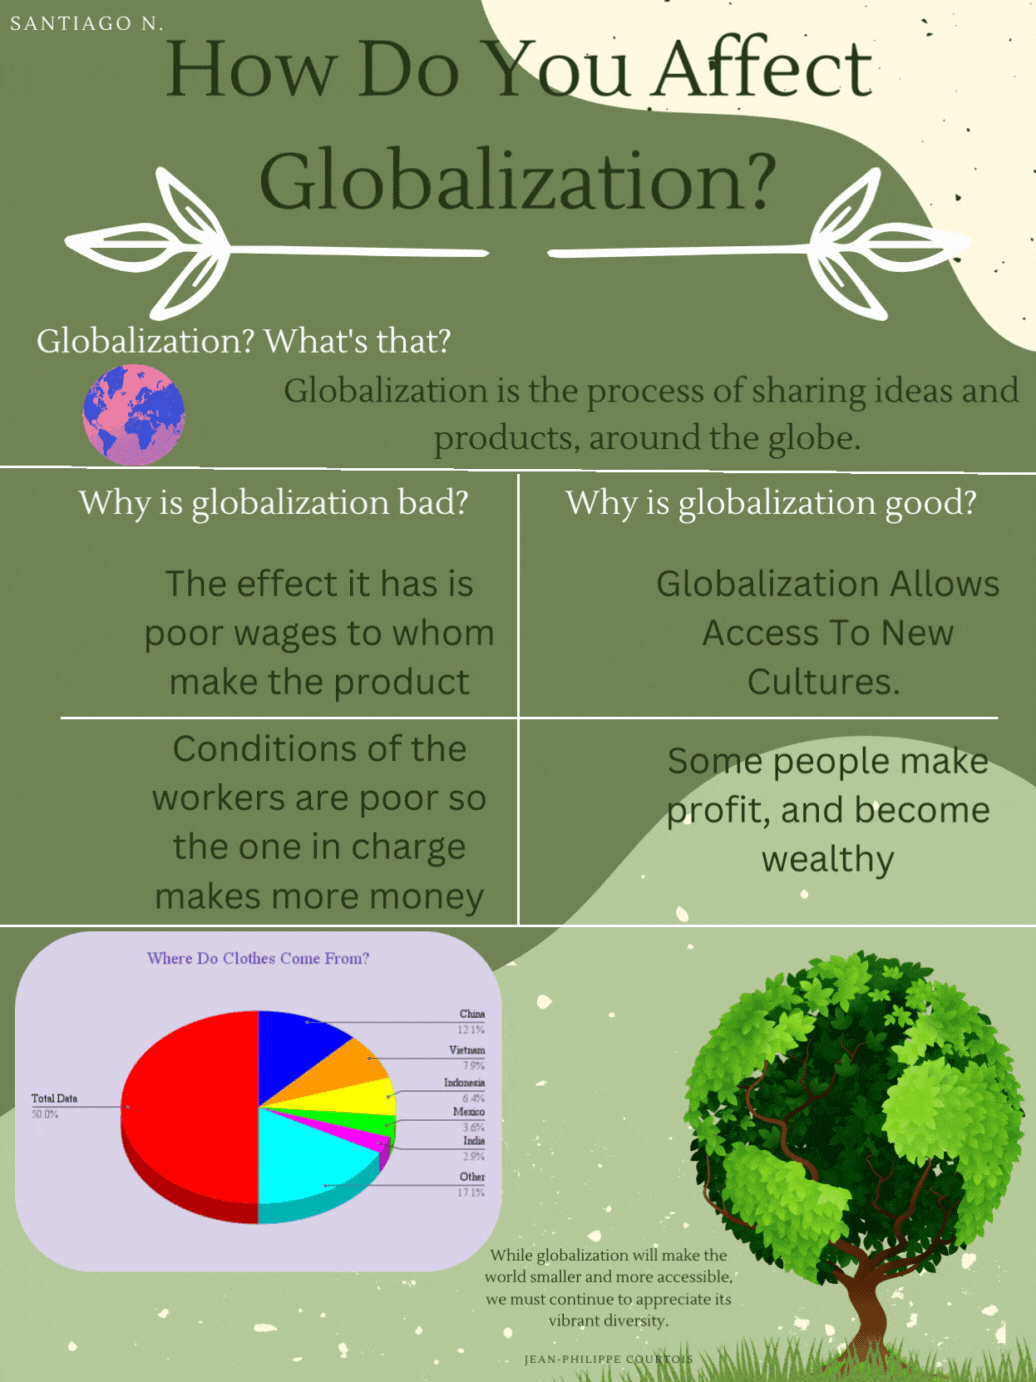 Globalization Infographic - Santiago N